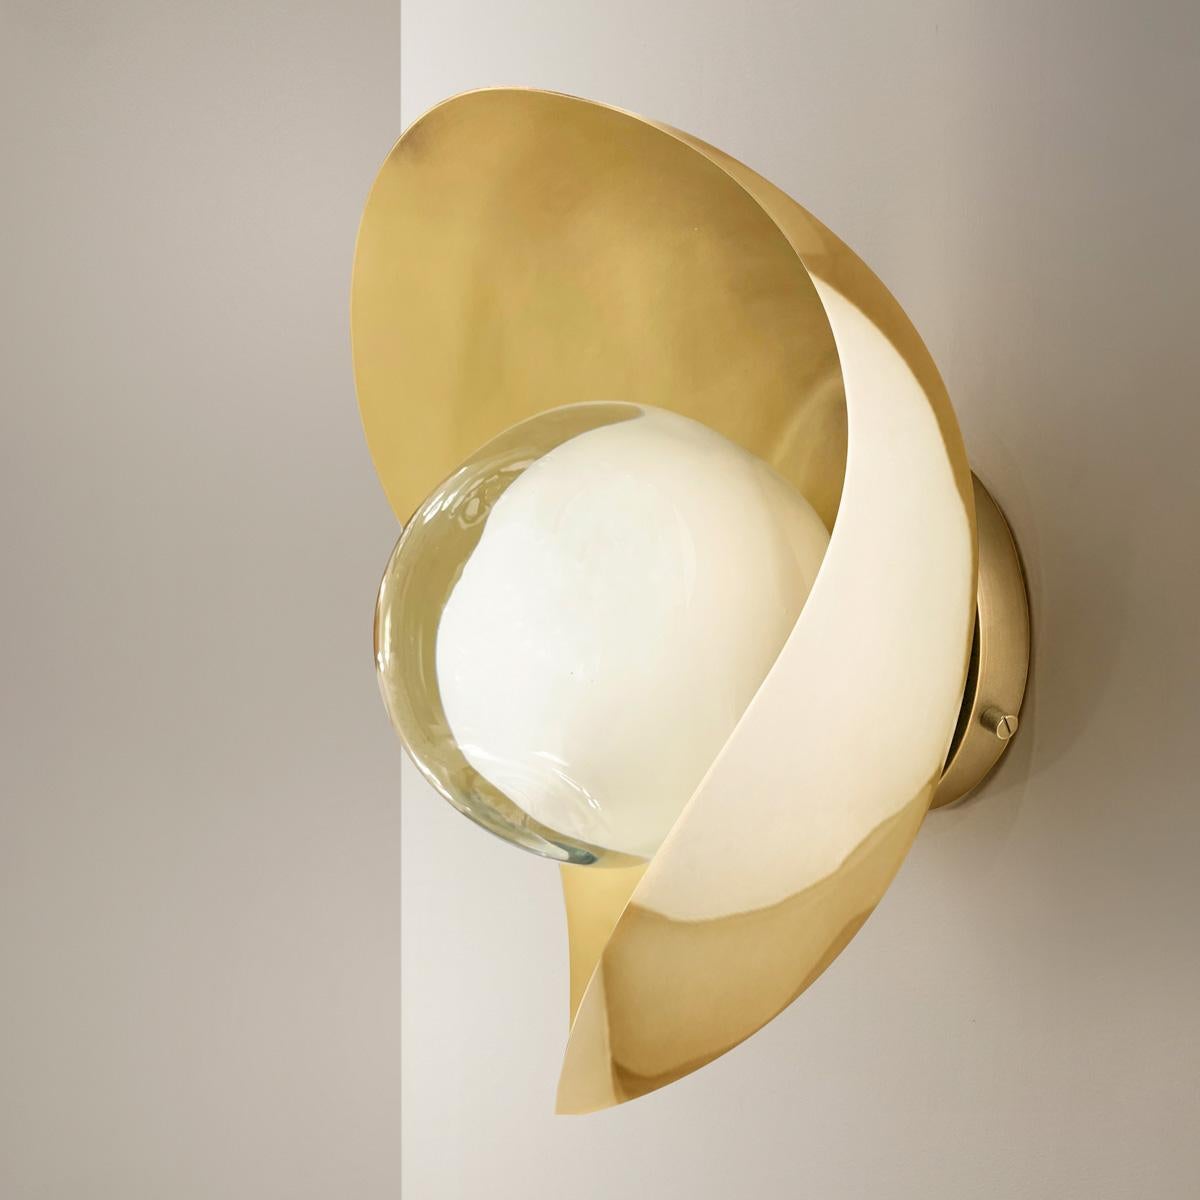 Perla Wall Light by Gaspare Asaro-Satin Brass/Acqua Finish For Sale 5